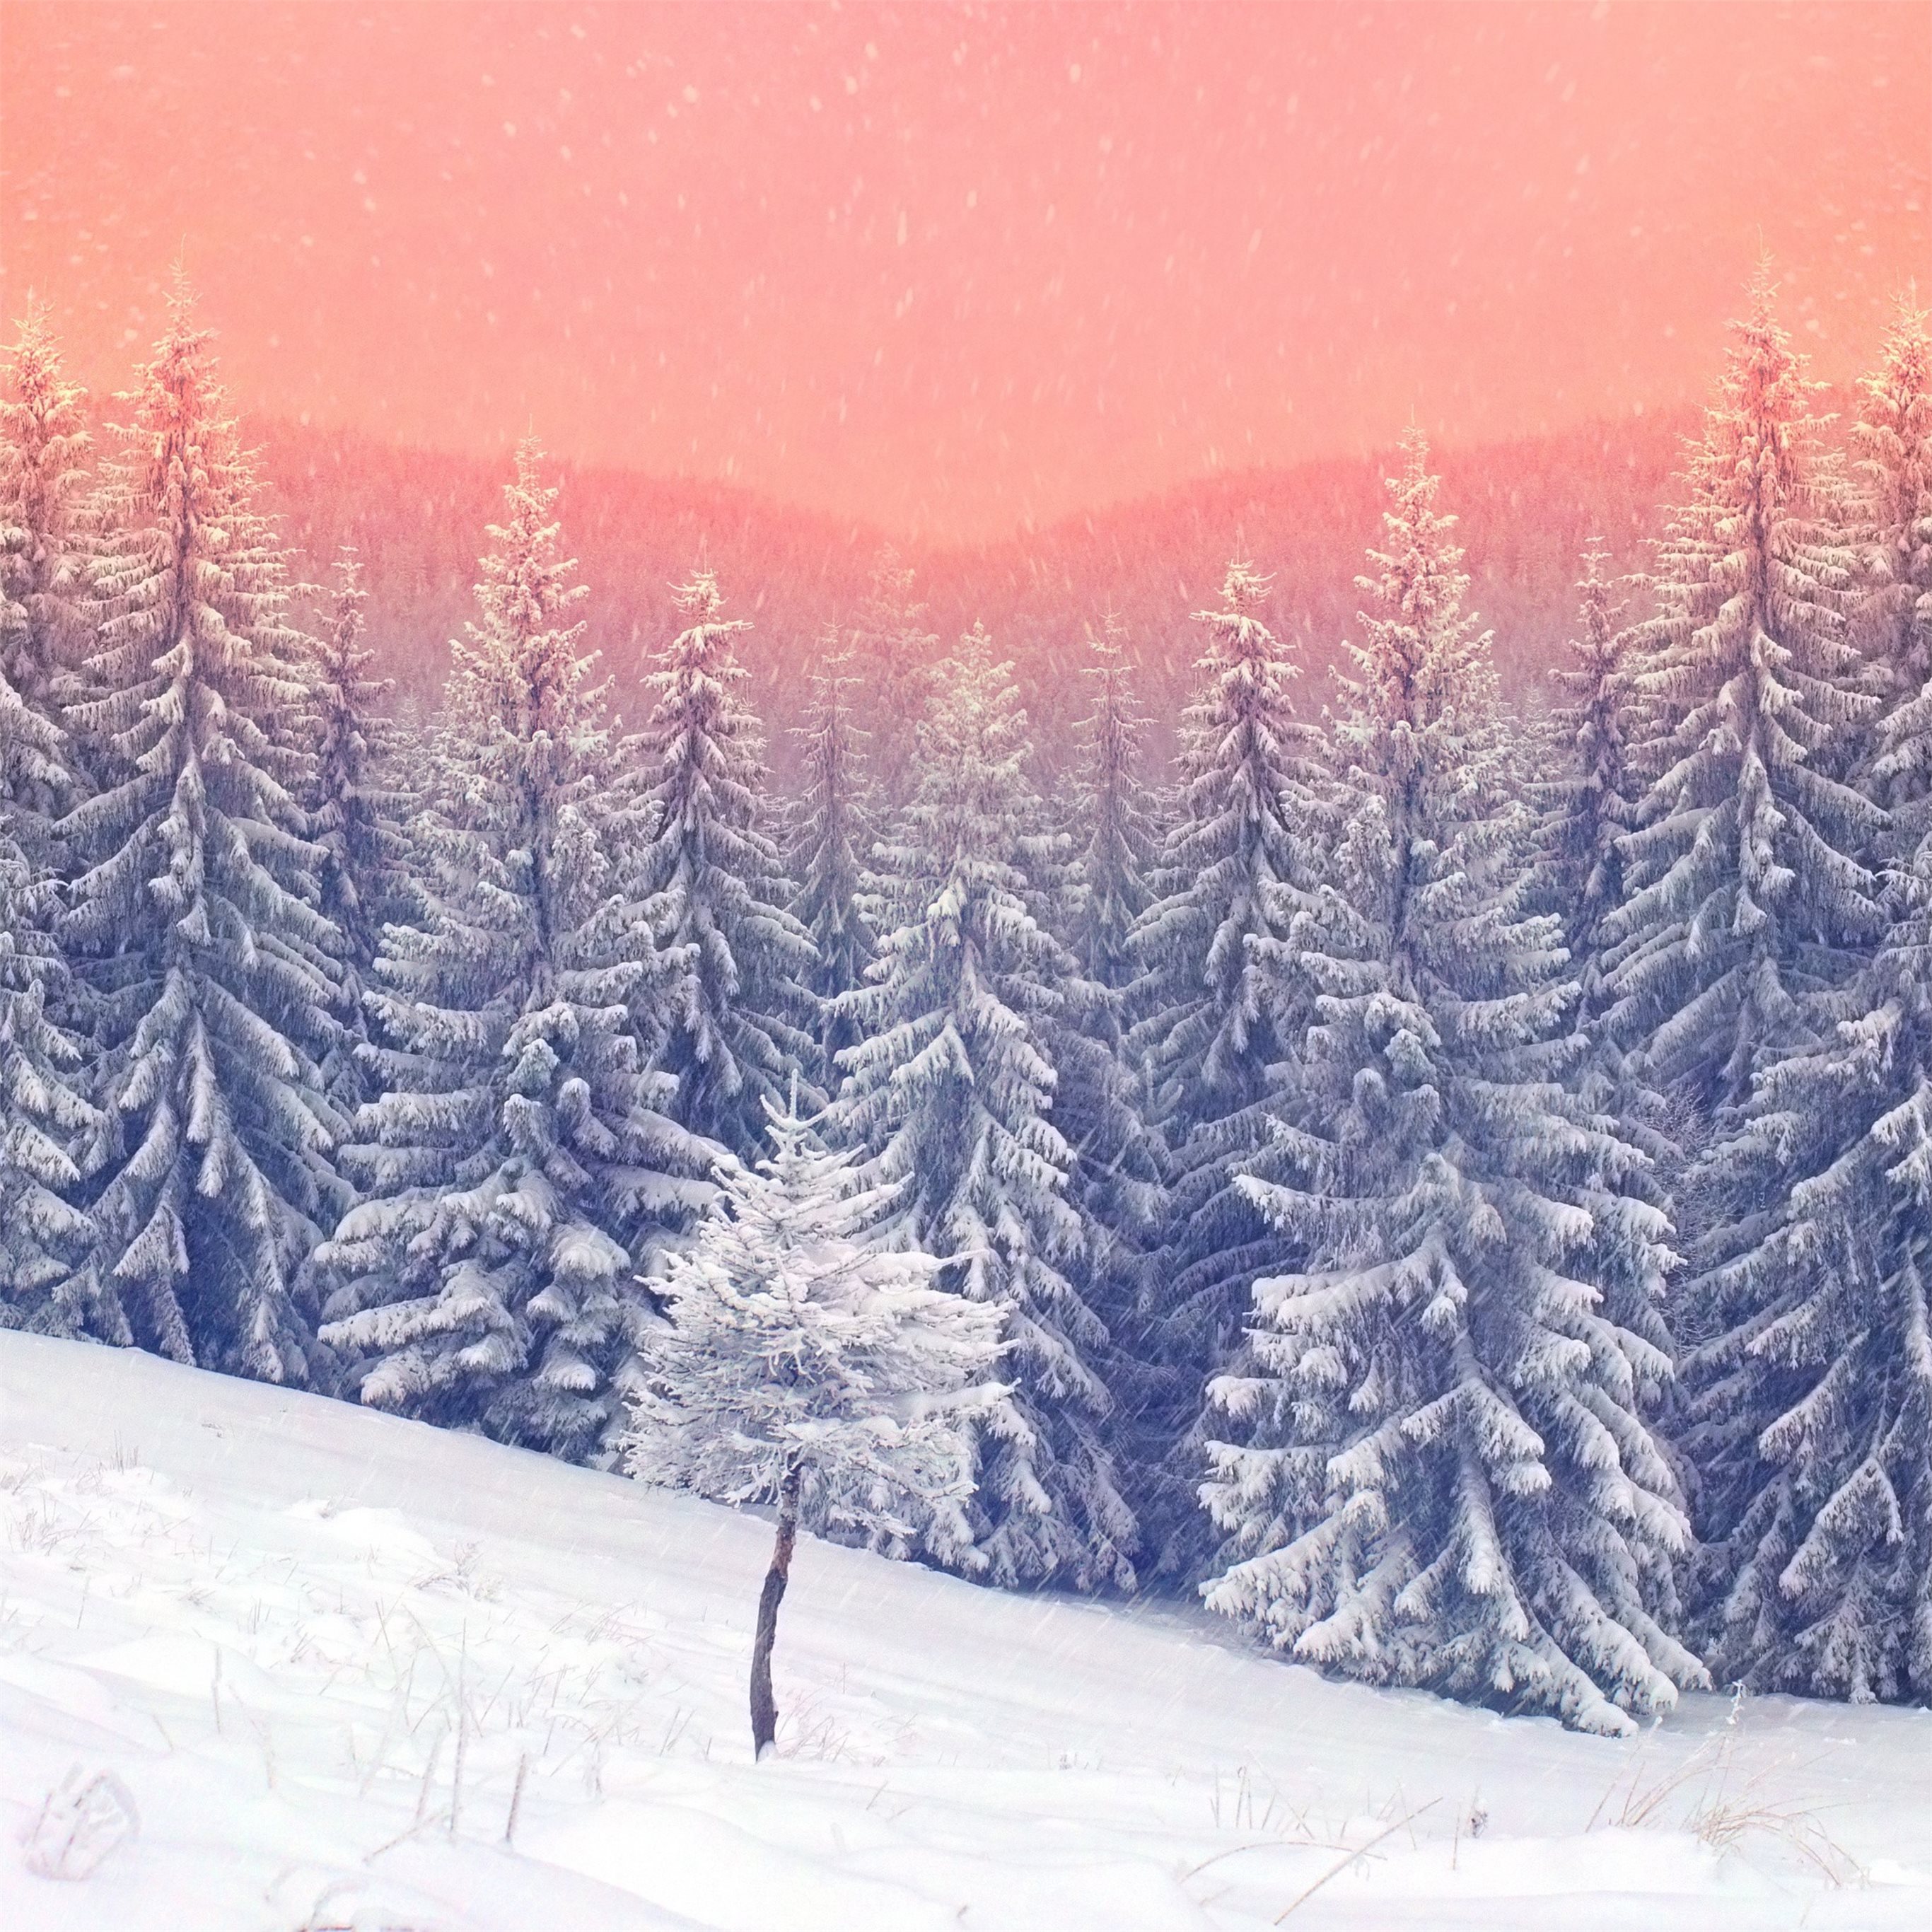 landscape snow trees 5k iPad Wallpaper Free Download